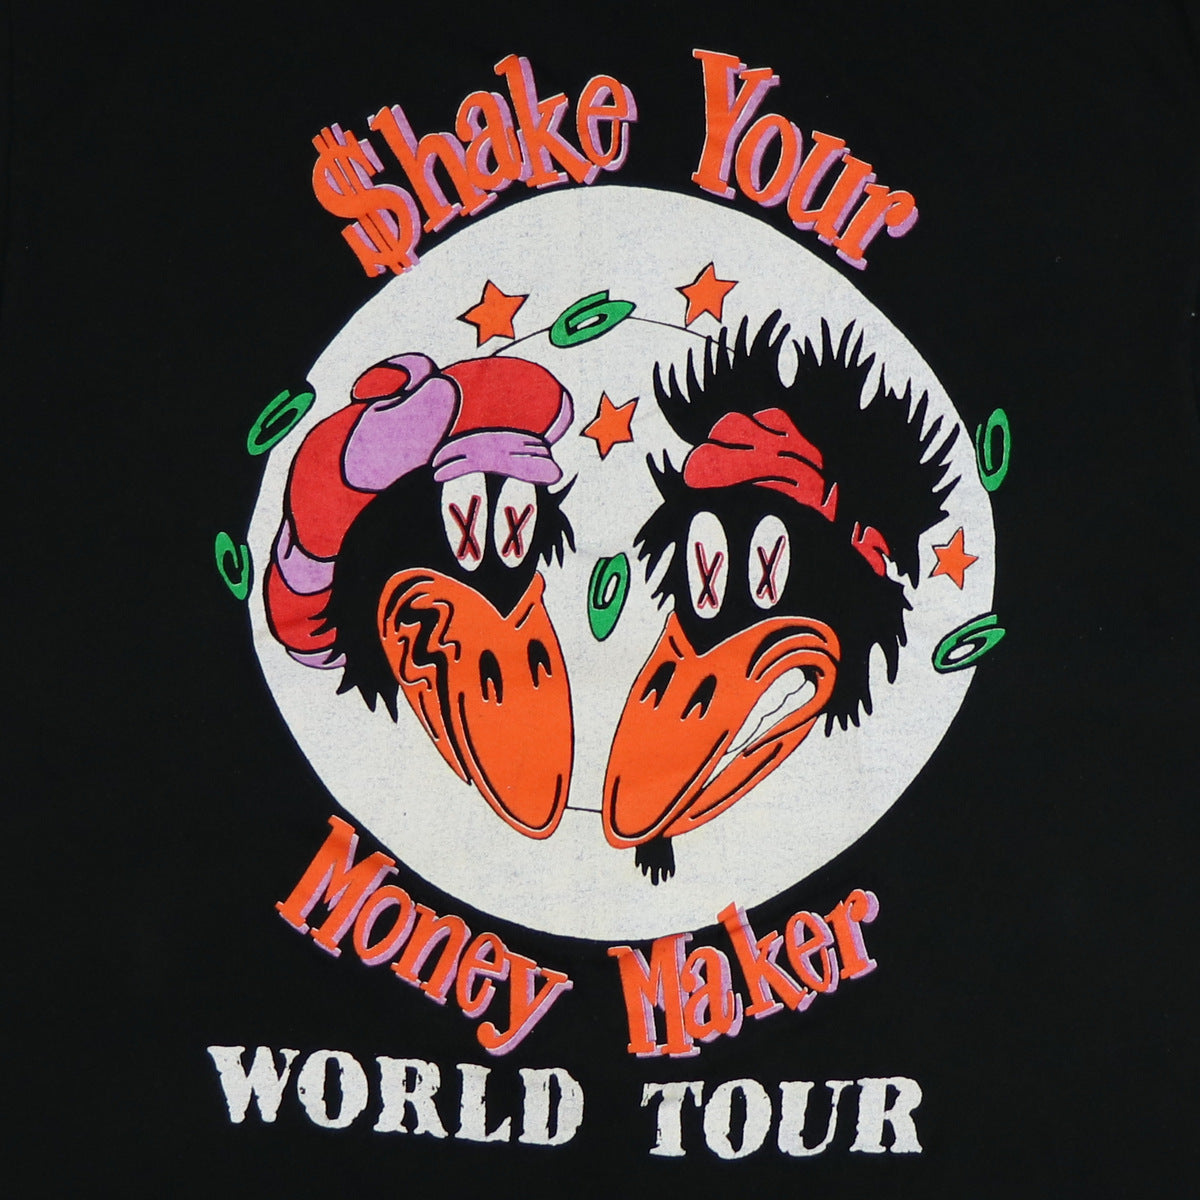 1990 Black Crowes Shake Your Money Maker World Tour Shirt